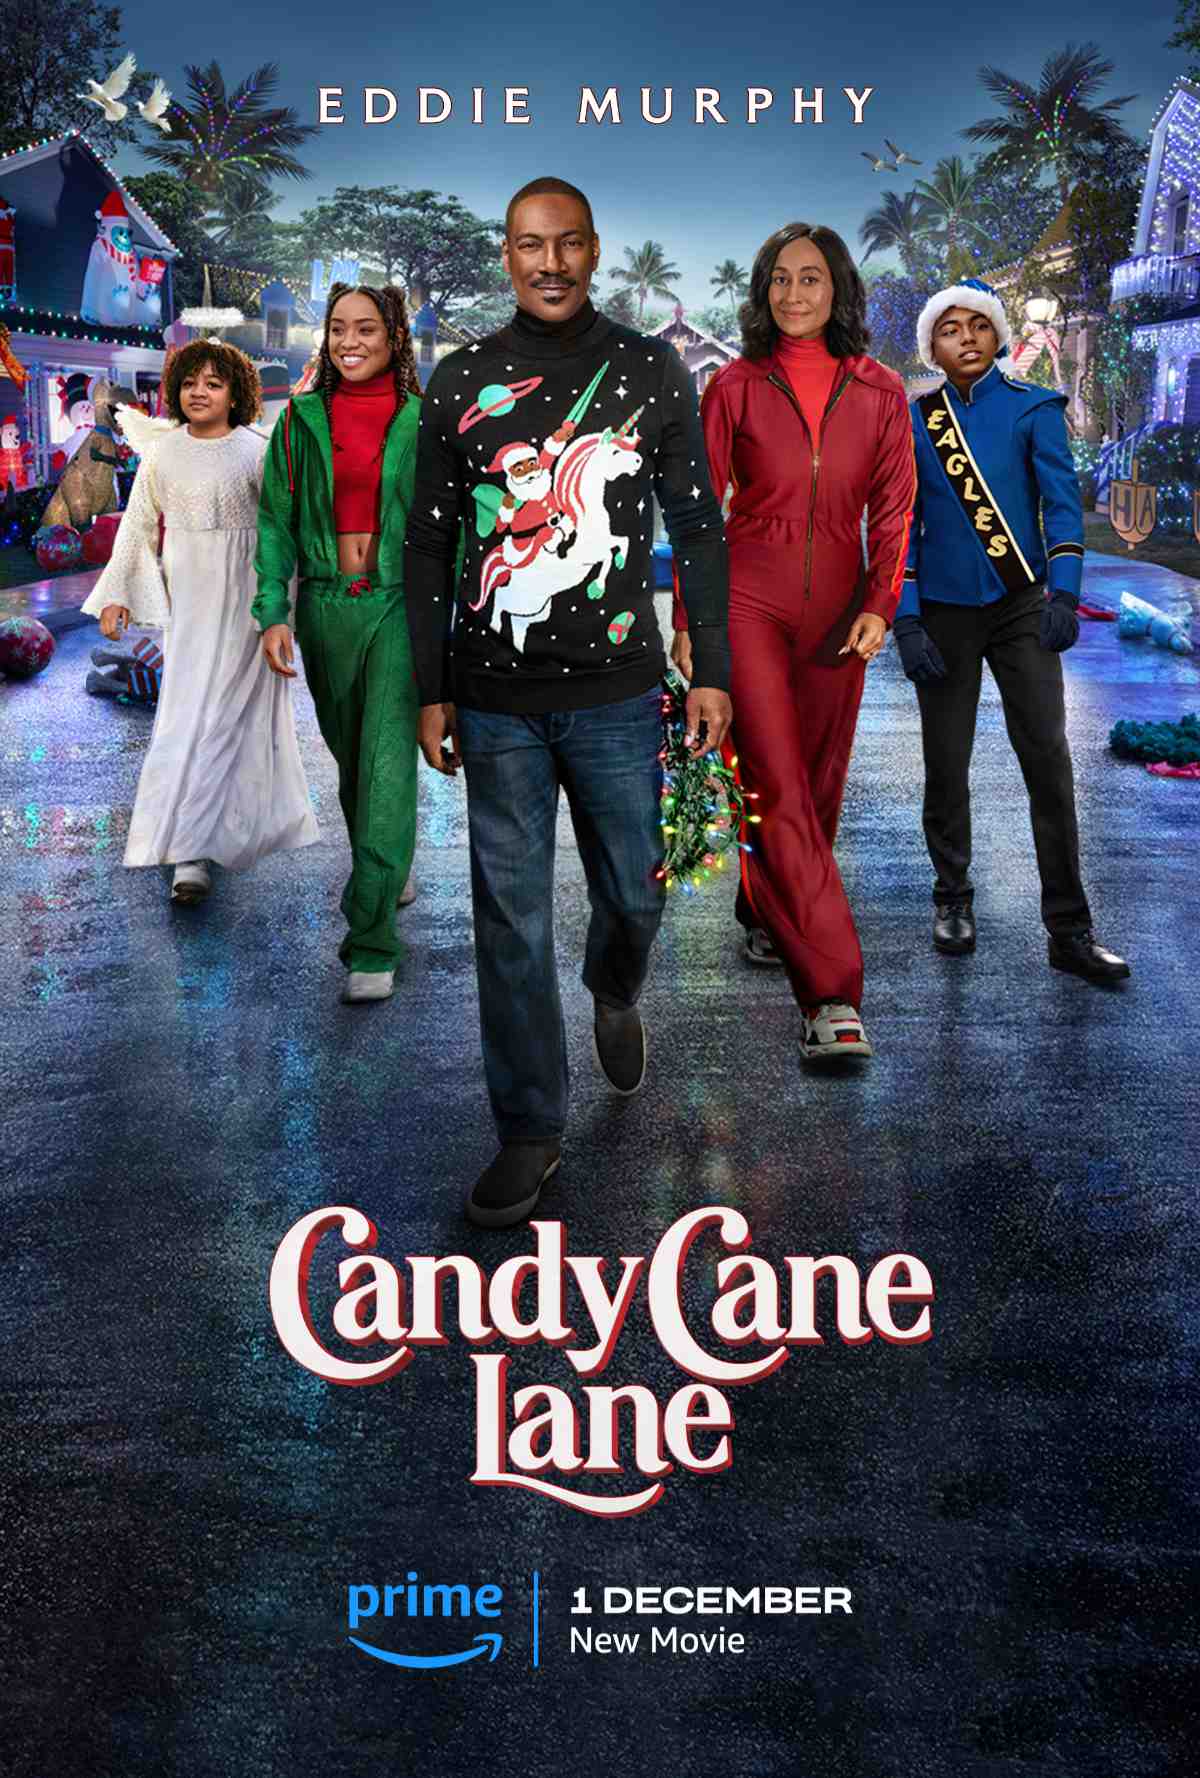 Candy Cane Lane Trailer